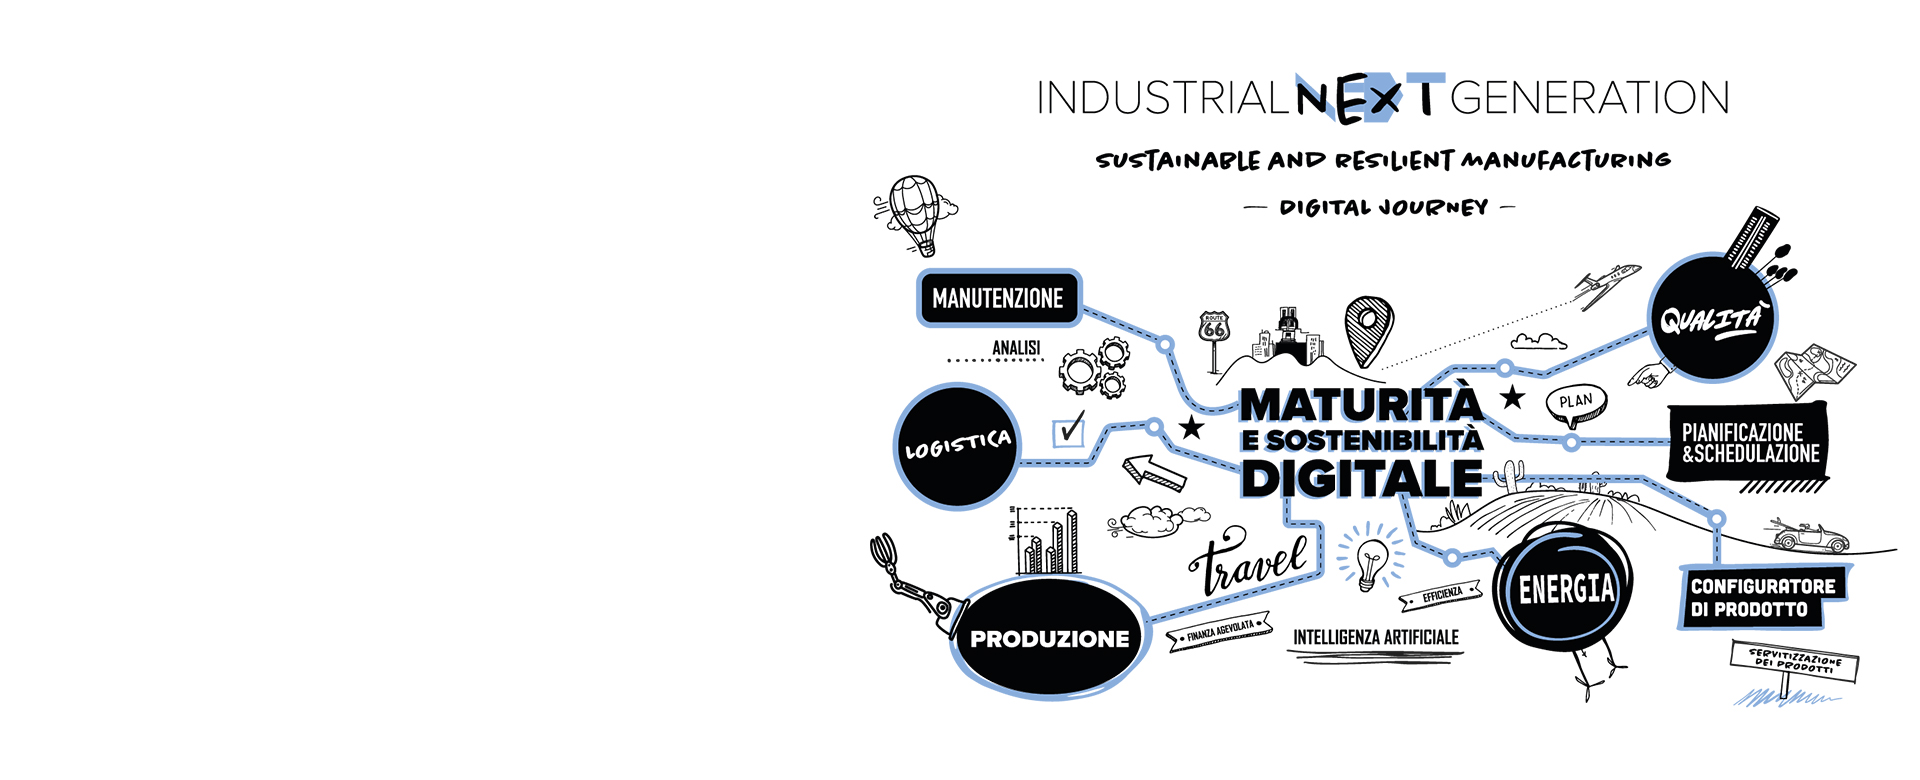 Digital Journey in manufacturing